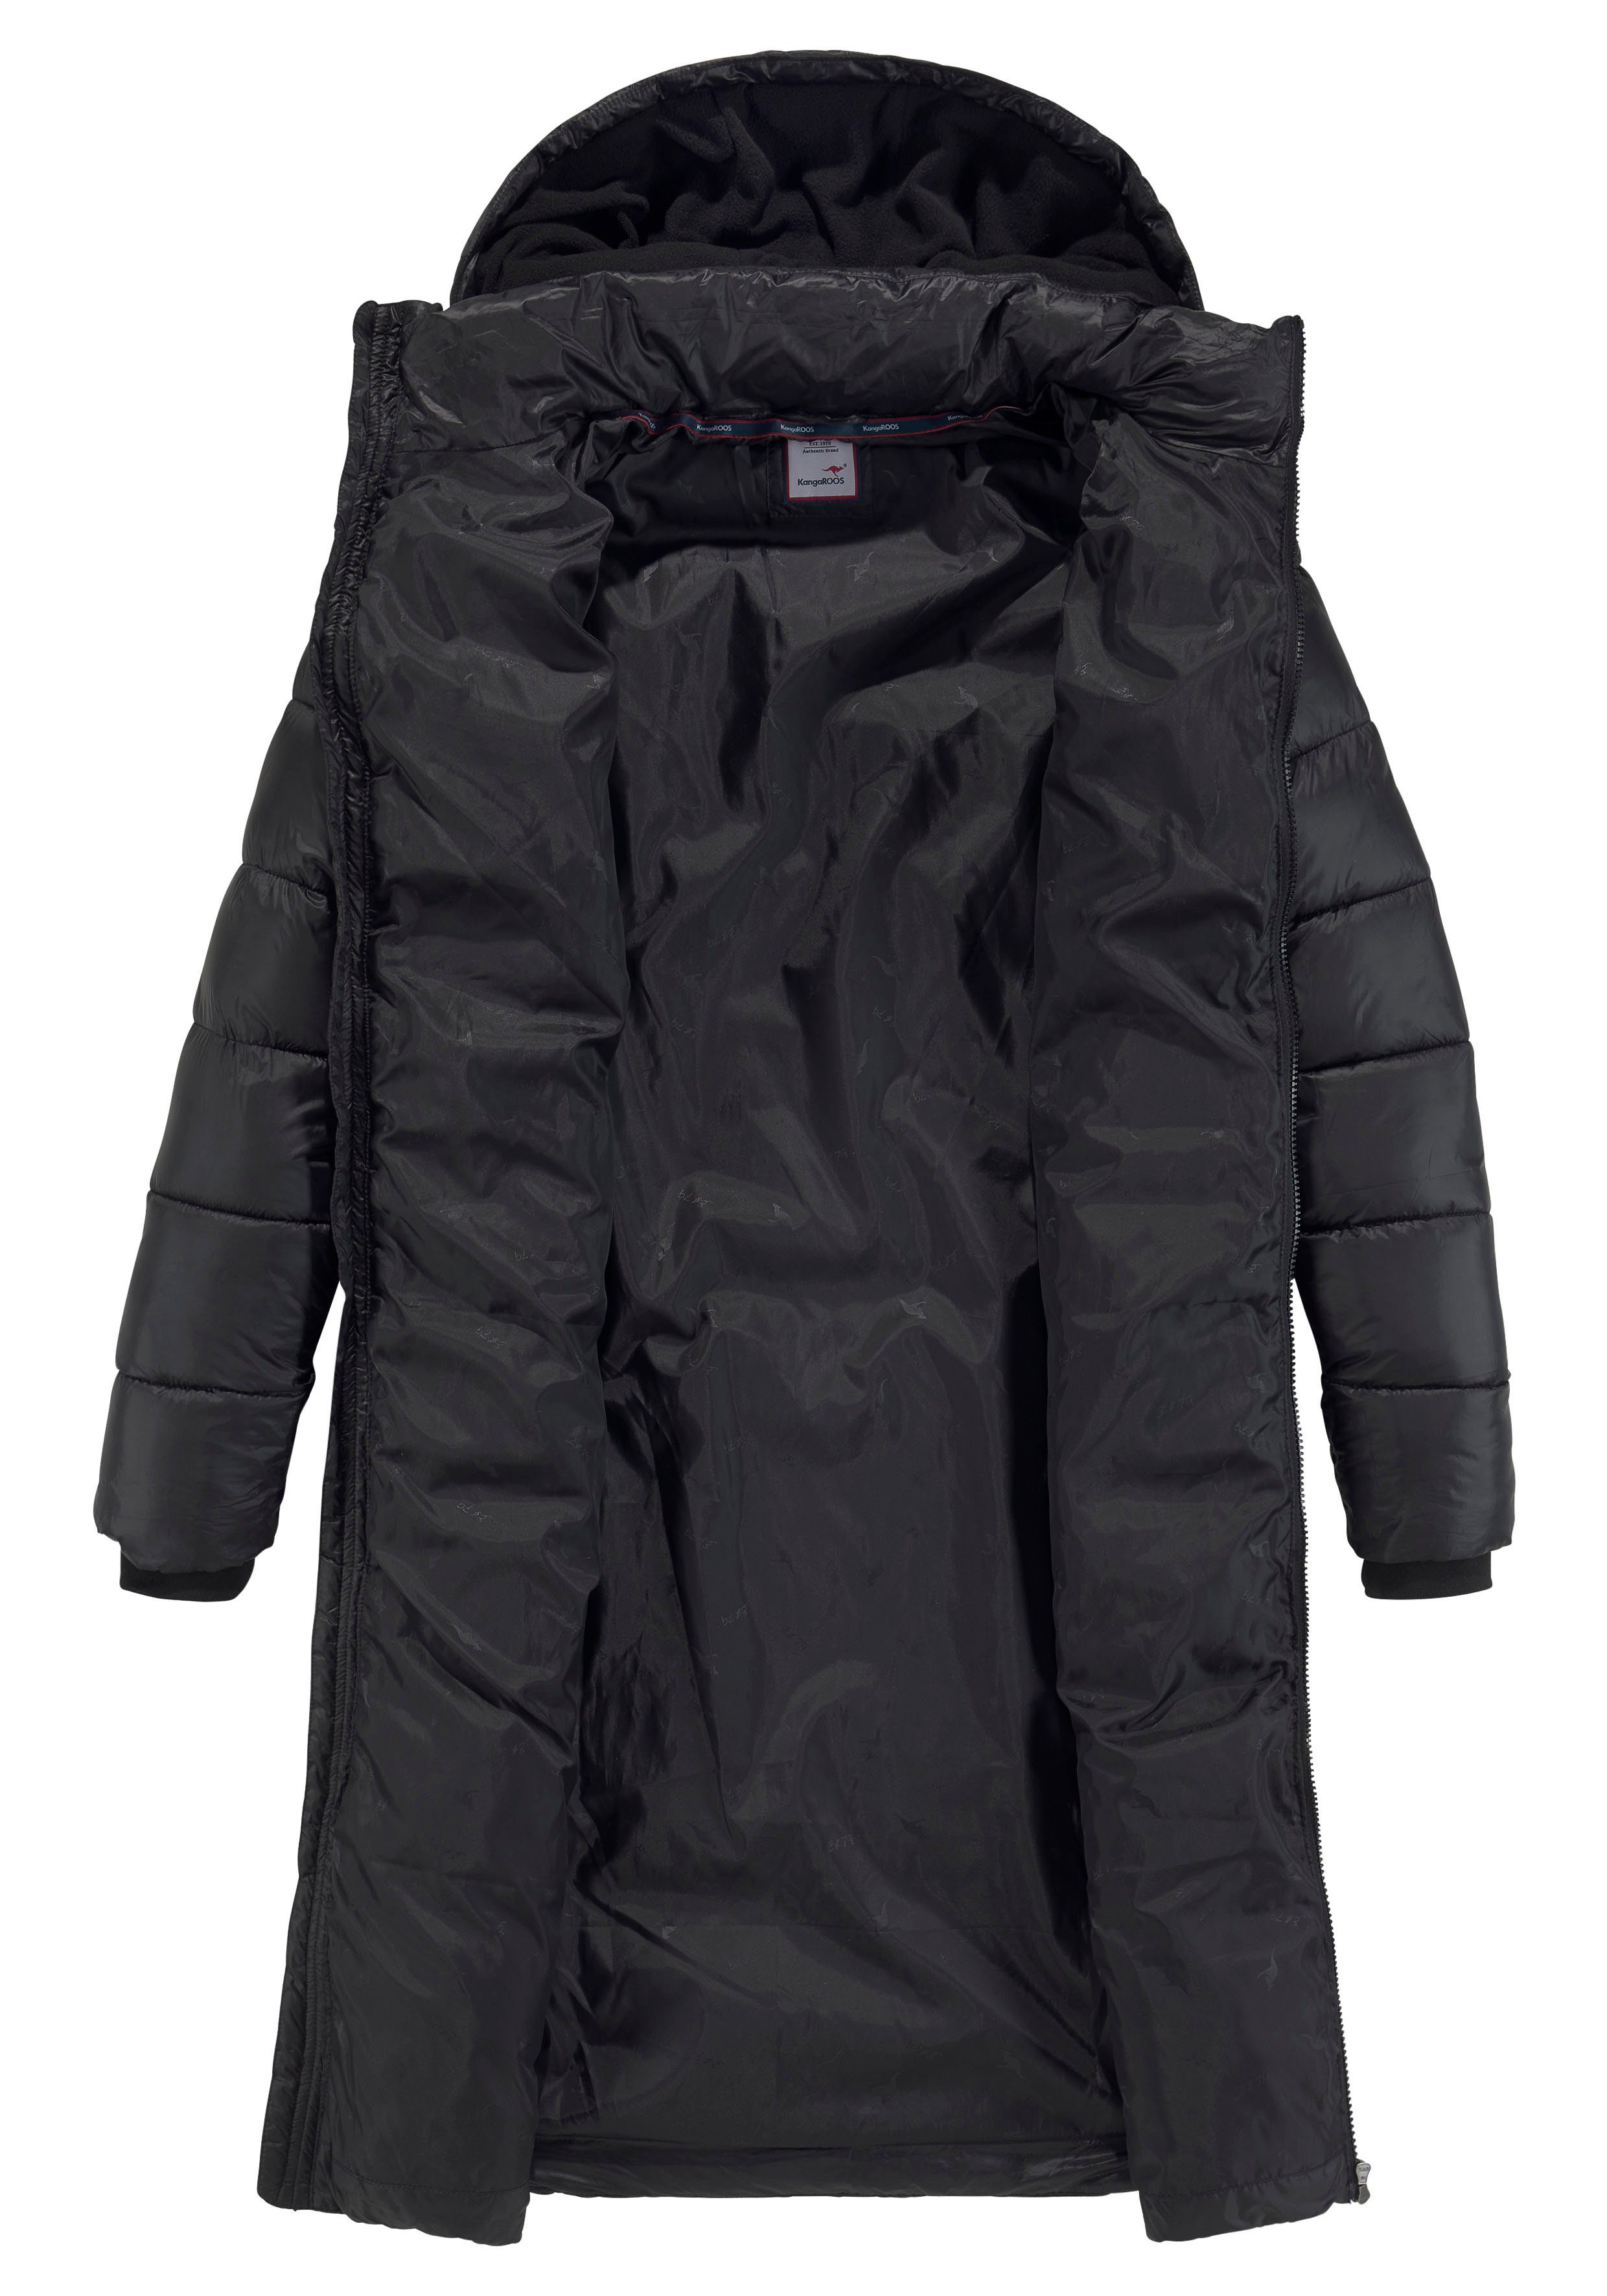 KangaROOS Steppmantel Material) abnehmbarer black Kapuze (Jacke aus mit nachhaltigem